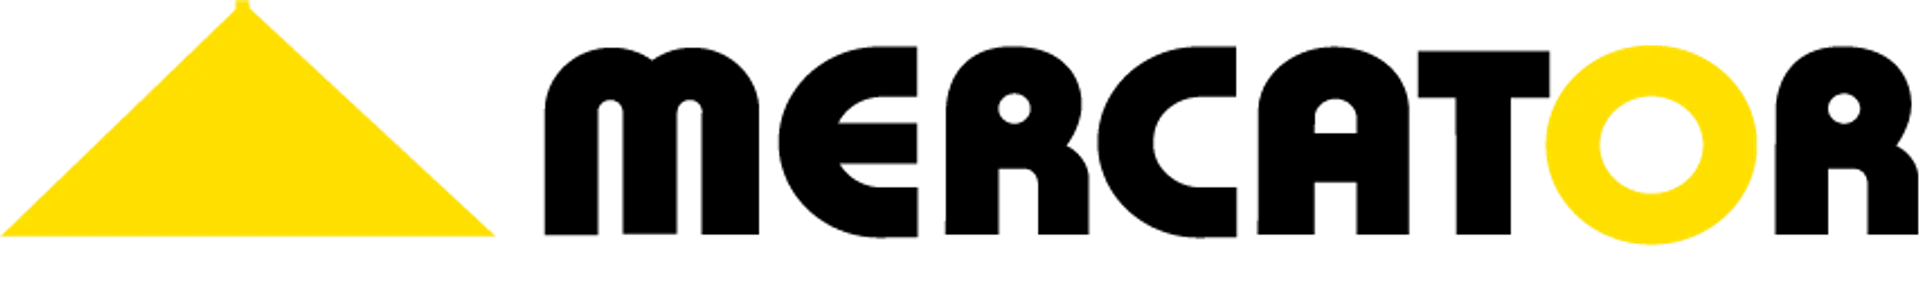 MERCATOR logo of current flyer